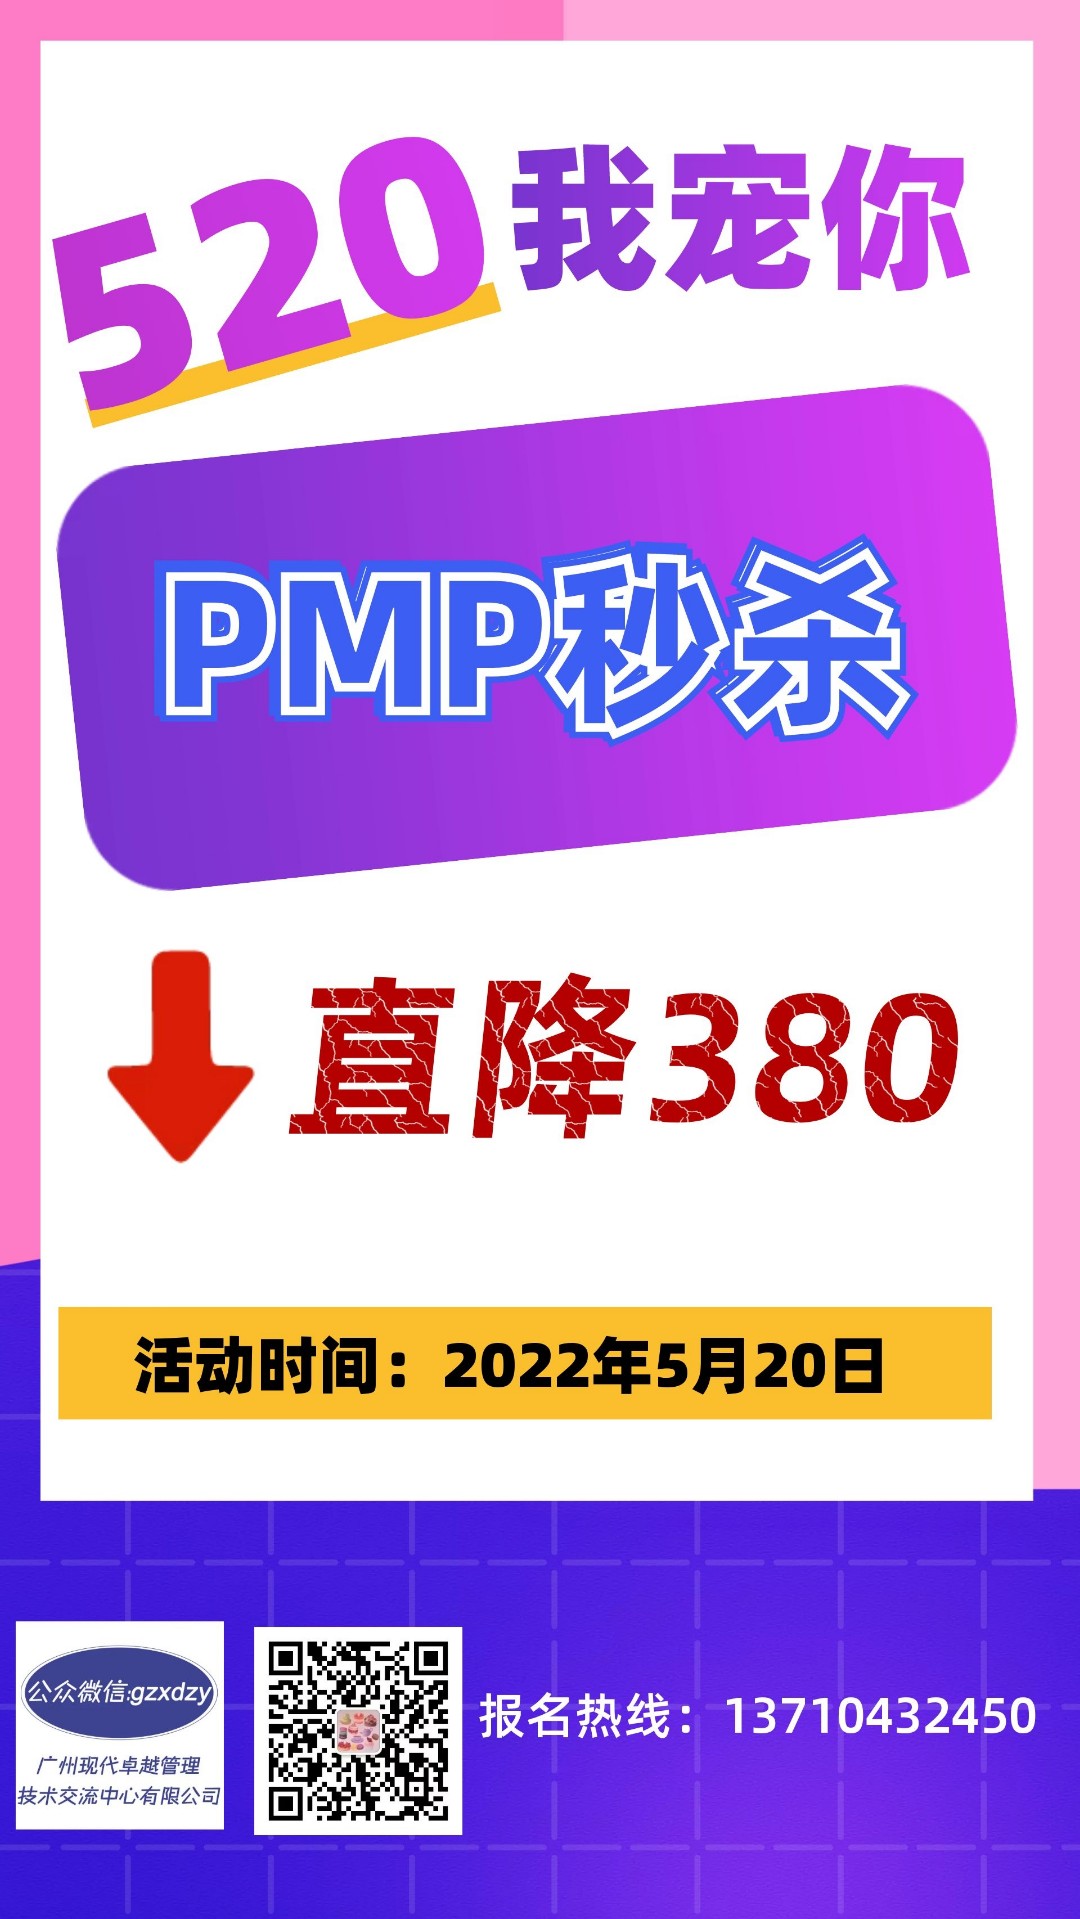 PMP考试通知：关于举办原2022年3月27日PMI认证考试有关事项的通知